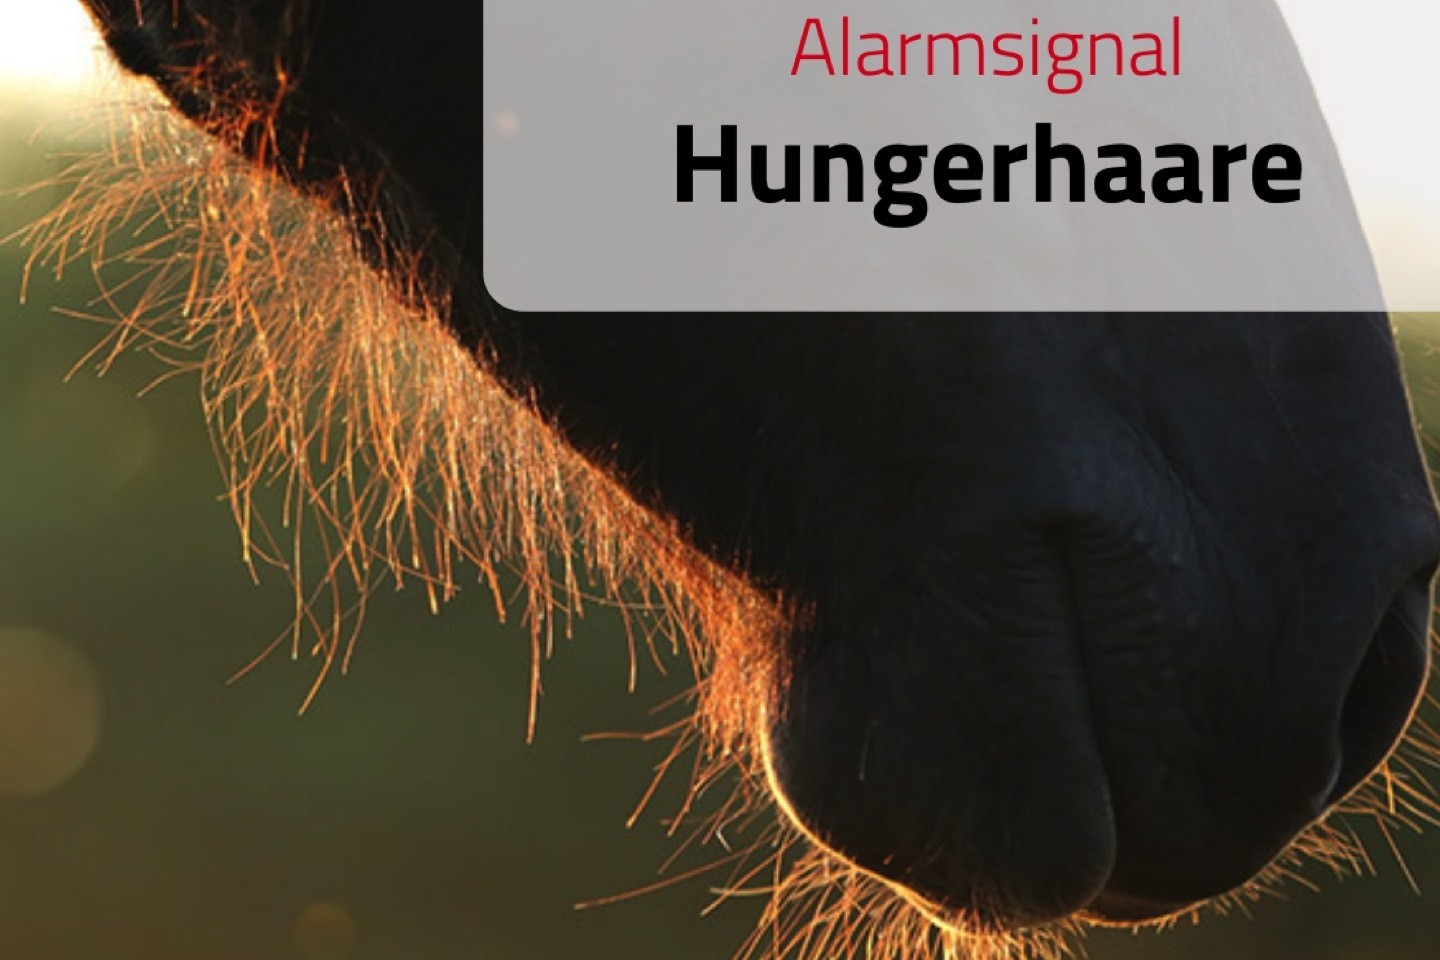 Hungerhaare,Tierheilpraxis Angela Esser, Everswinkel,Alarmsignal,